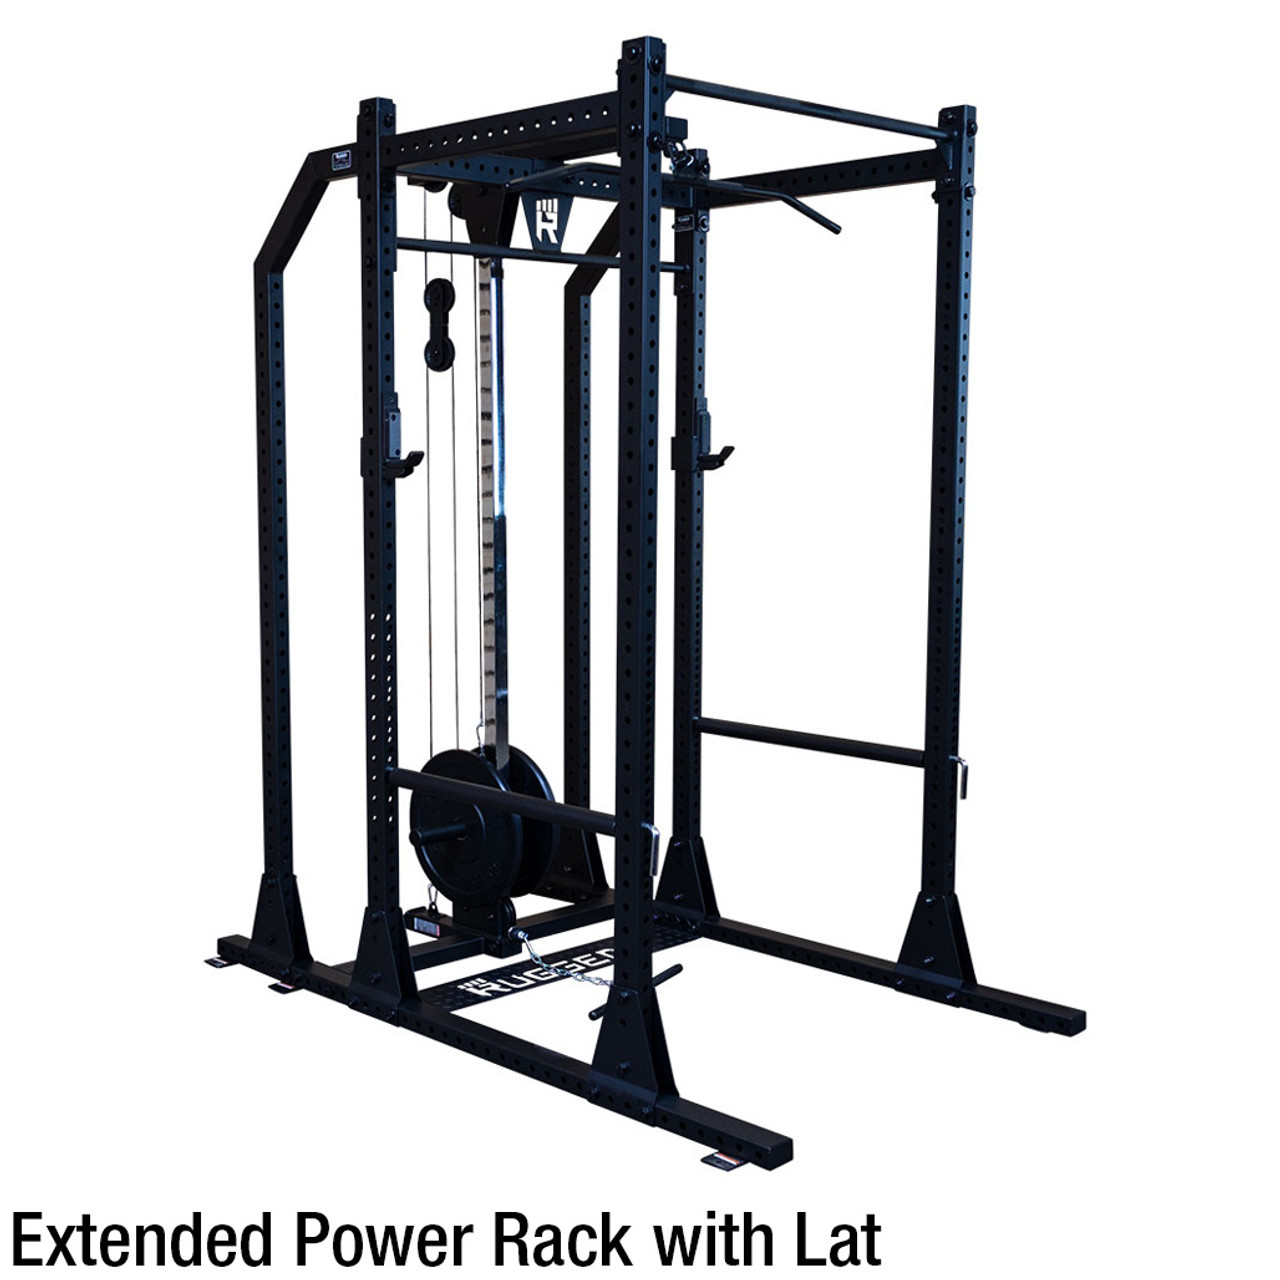 Rugged Fitness Power Rack Y100 - Power Racks